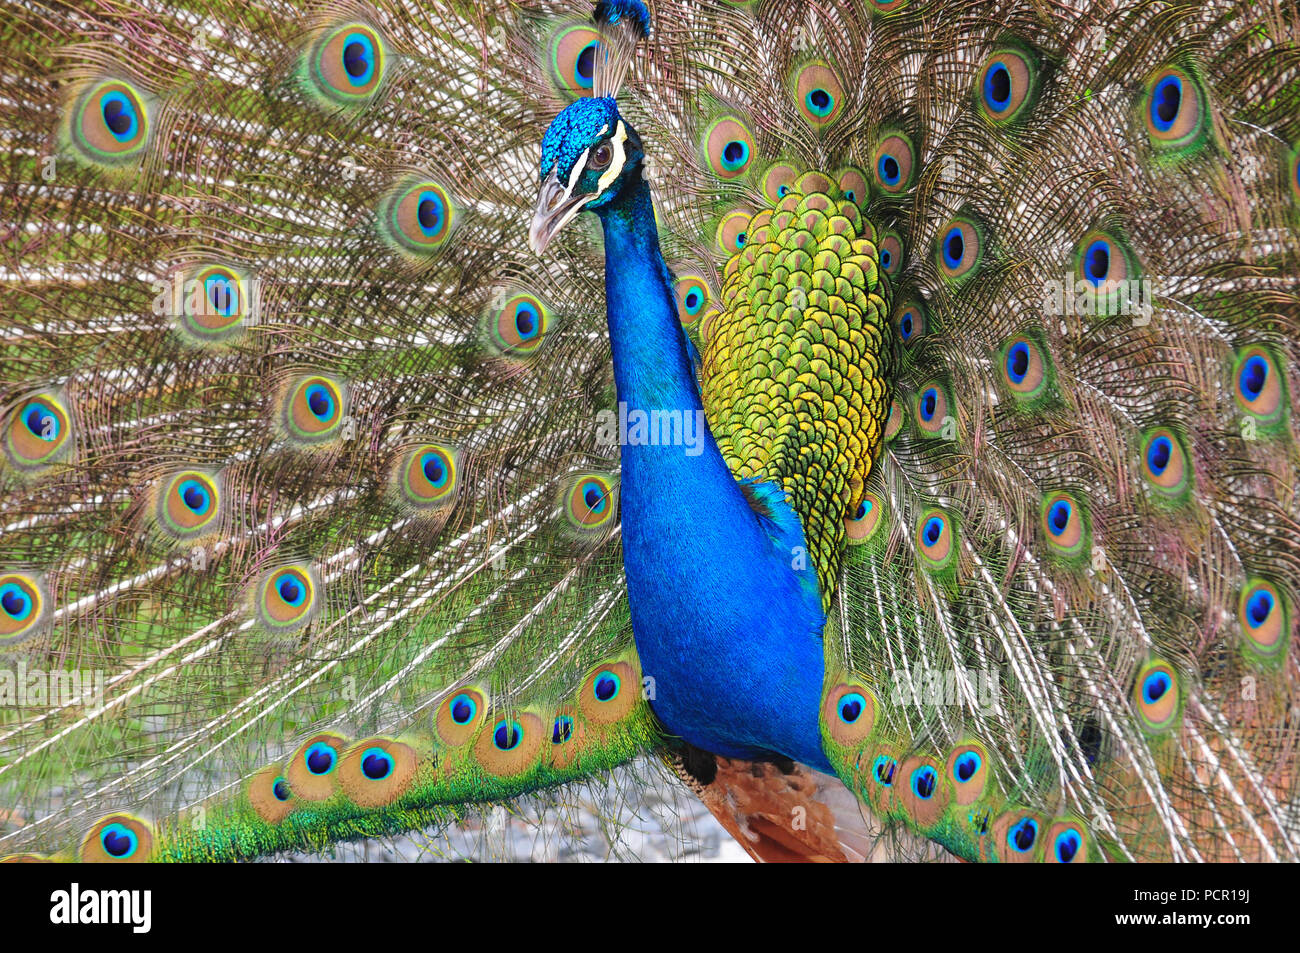 Close up of a beautiful male Peacock displaying its beautiful plumage Stock Photo